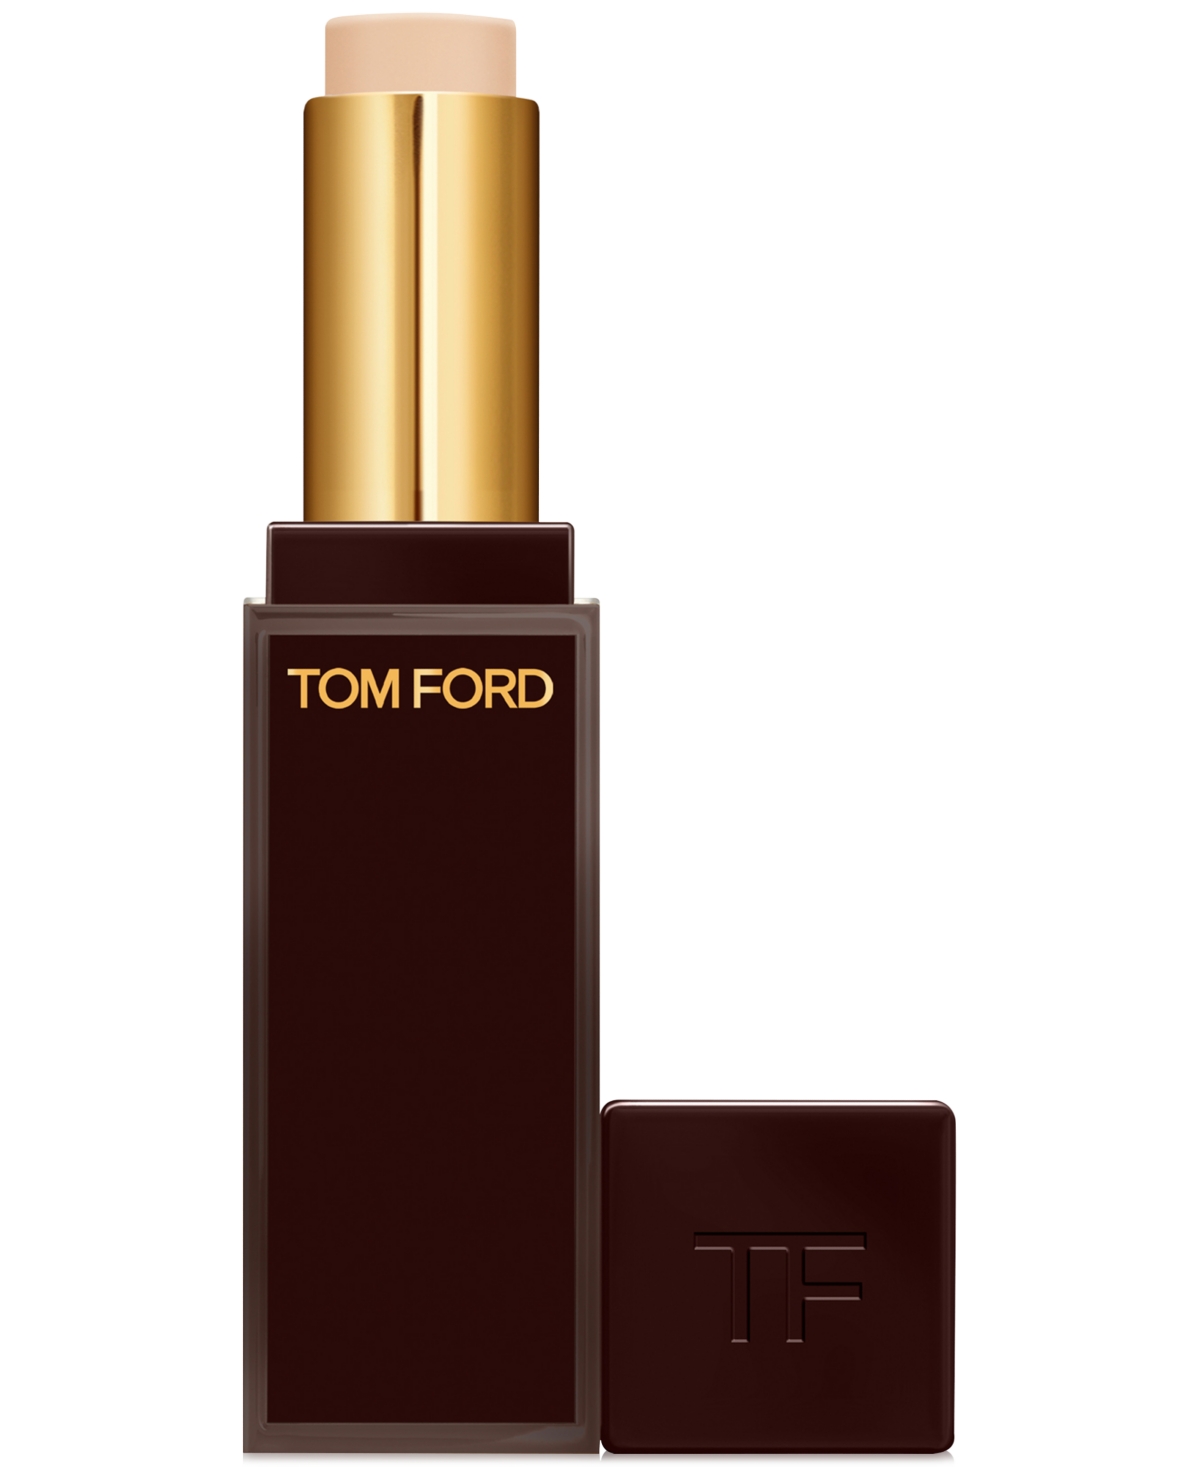 Tom Ford Traceless Soft Matte Concealer In C Silk (light Skin With Pink Undertones)